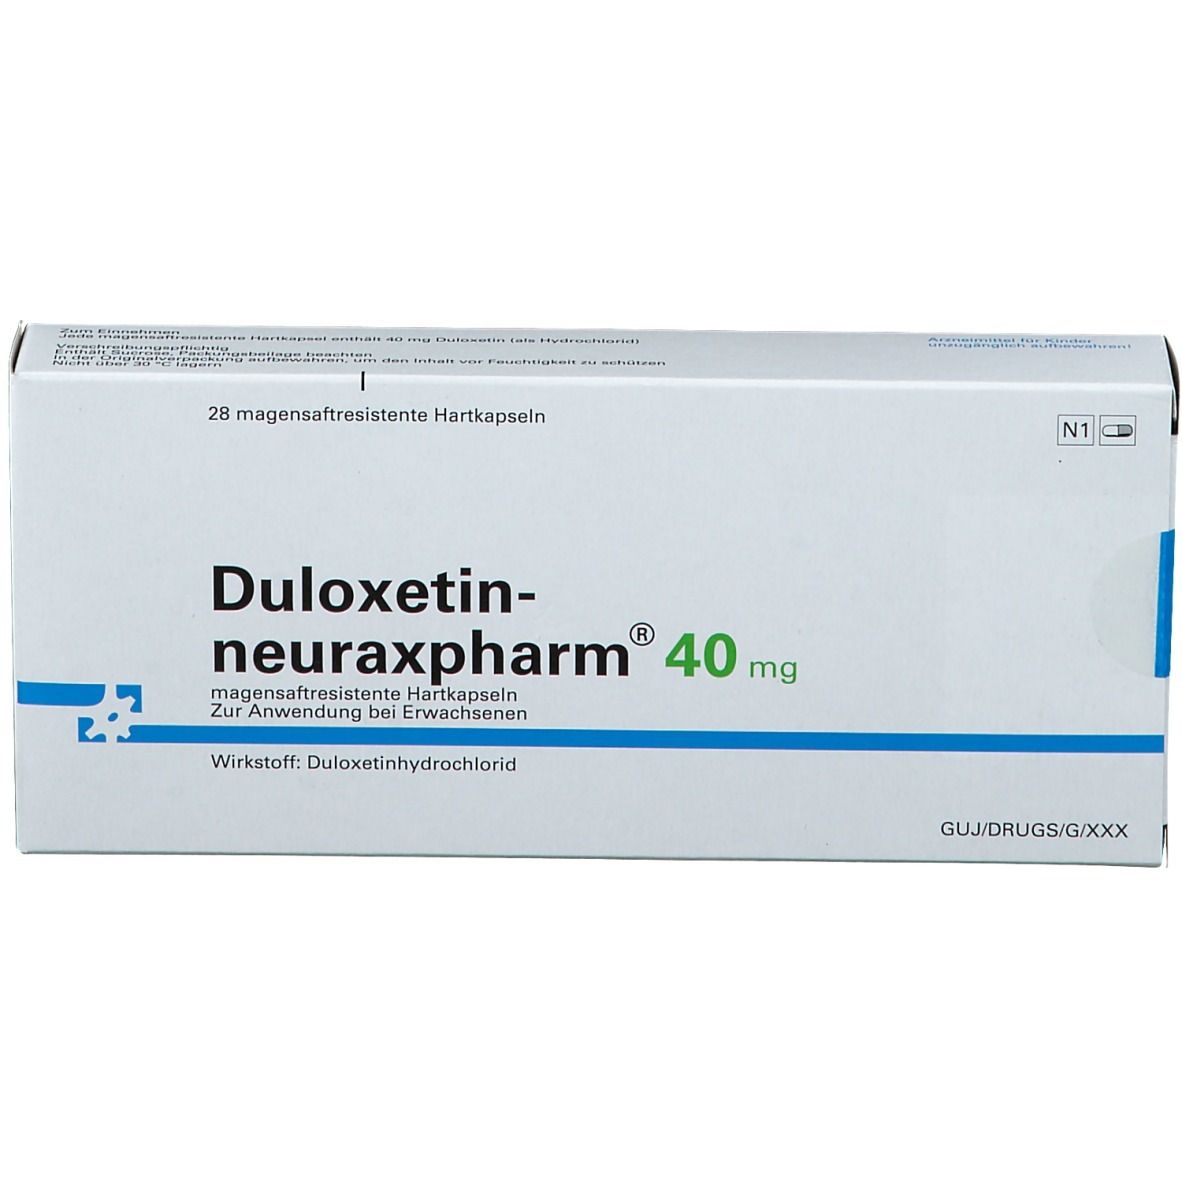 Duloxetin-neuraxpharm® 40 mg